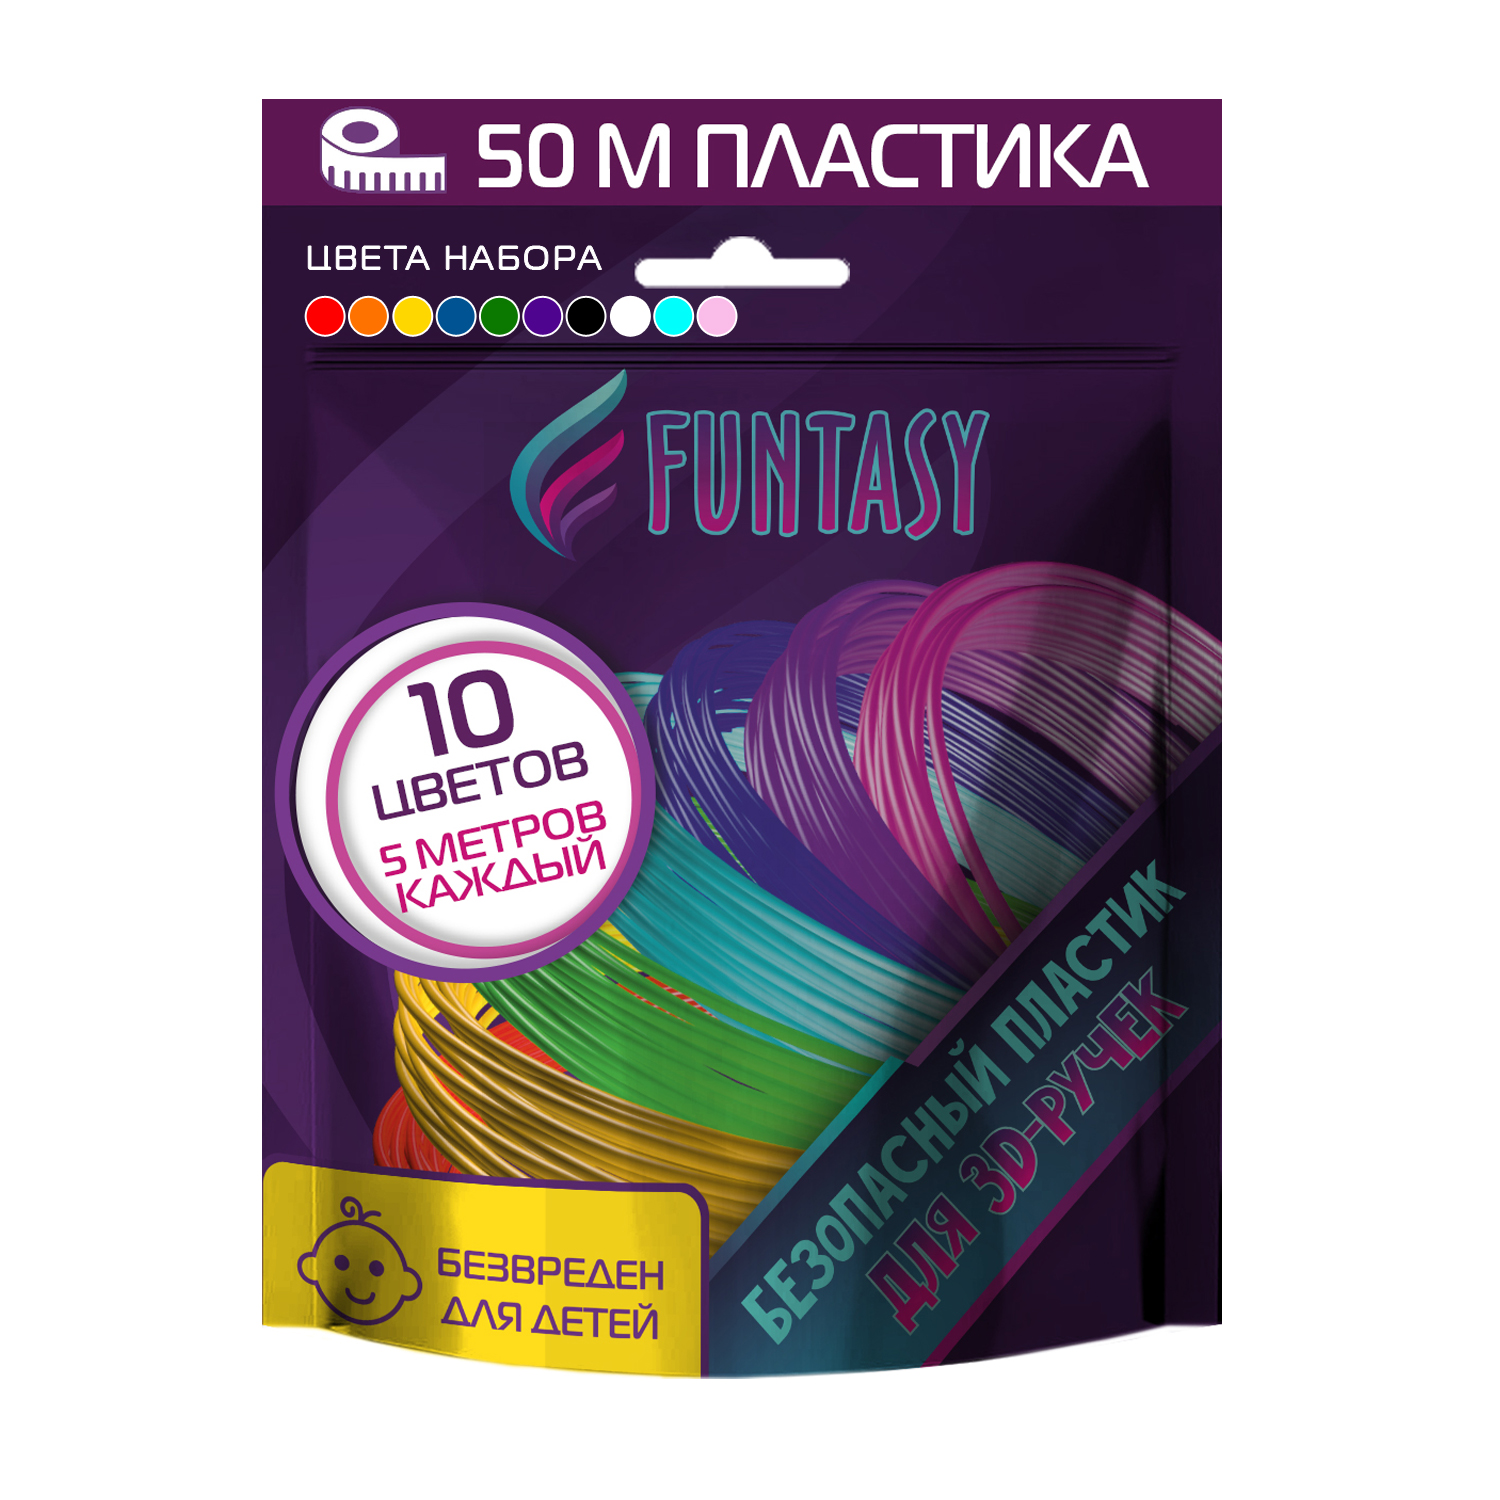 Пластик PLA для 3d ручки Funtasy 10 цветов по 5 метров - фото 1